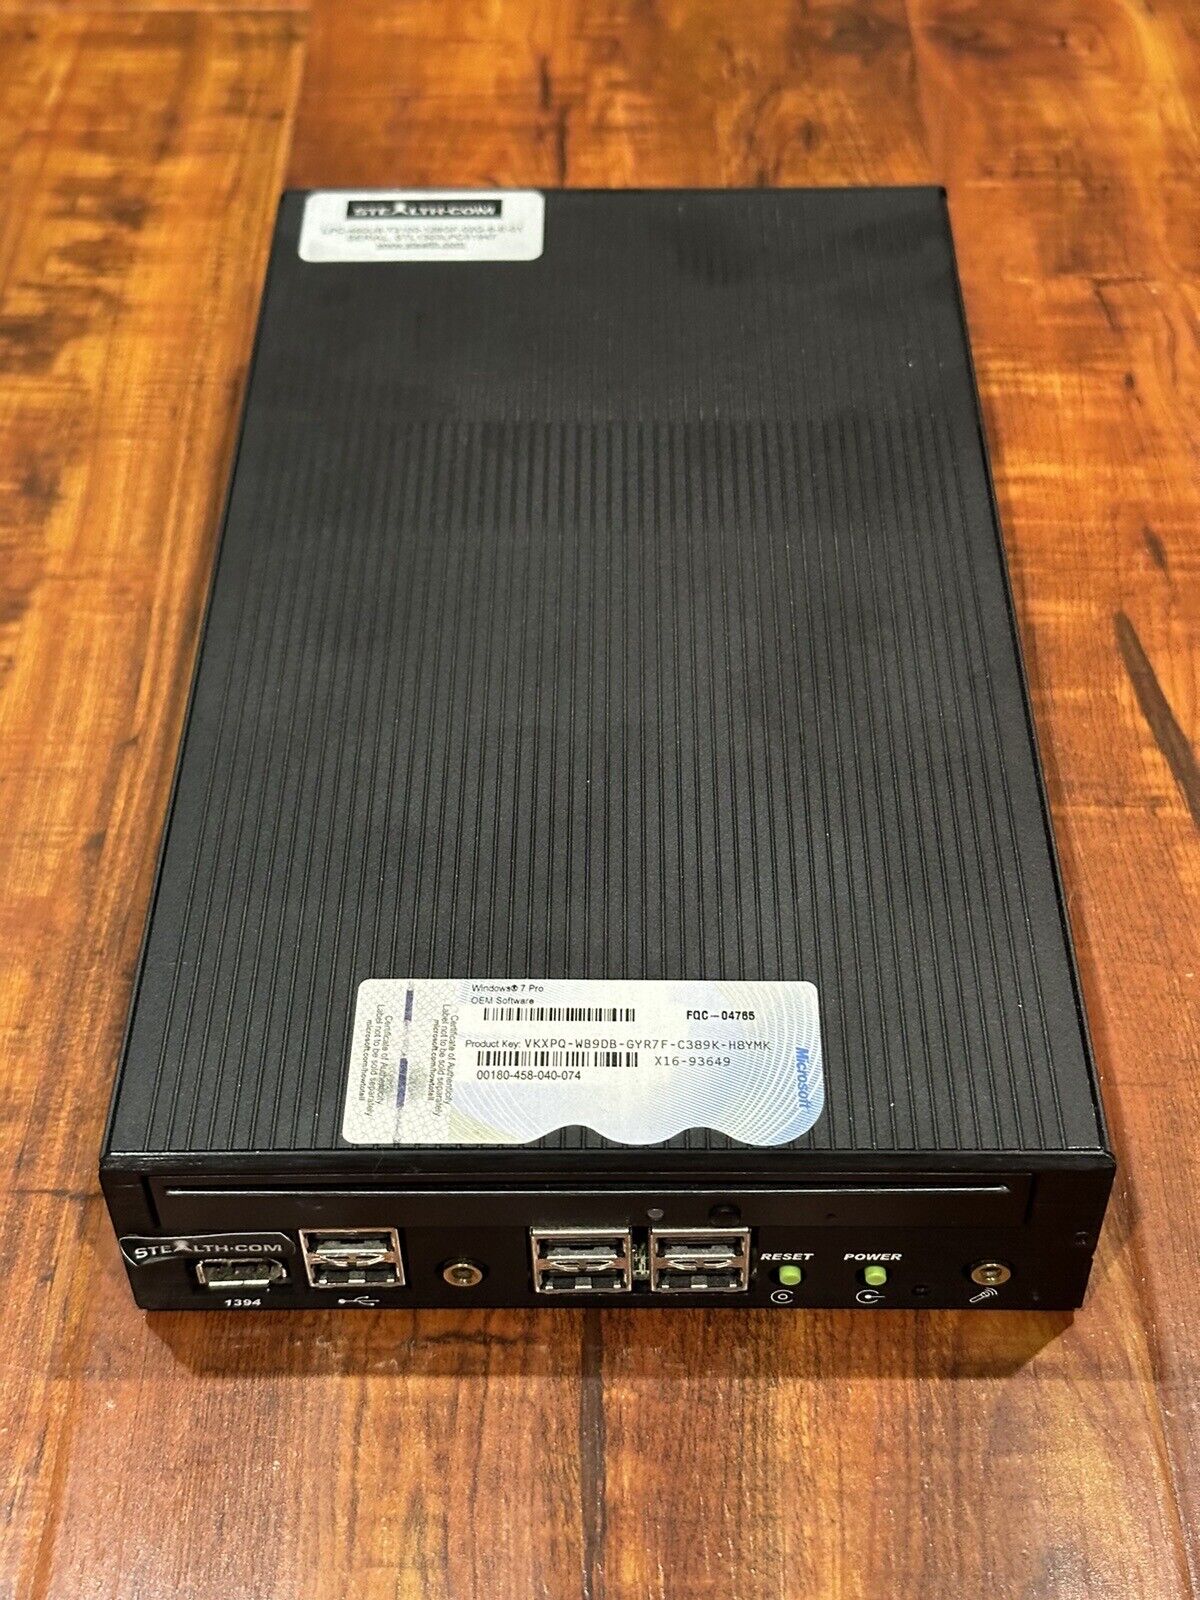 Stealth LPC-460U8 Dual Core Mini PC with 8 USB 2.0 Ports with Windows 7 Pro